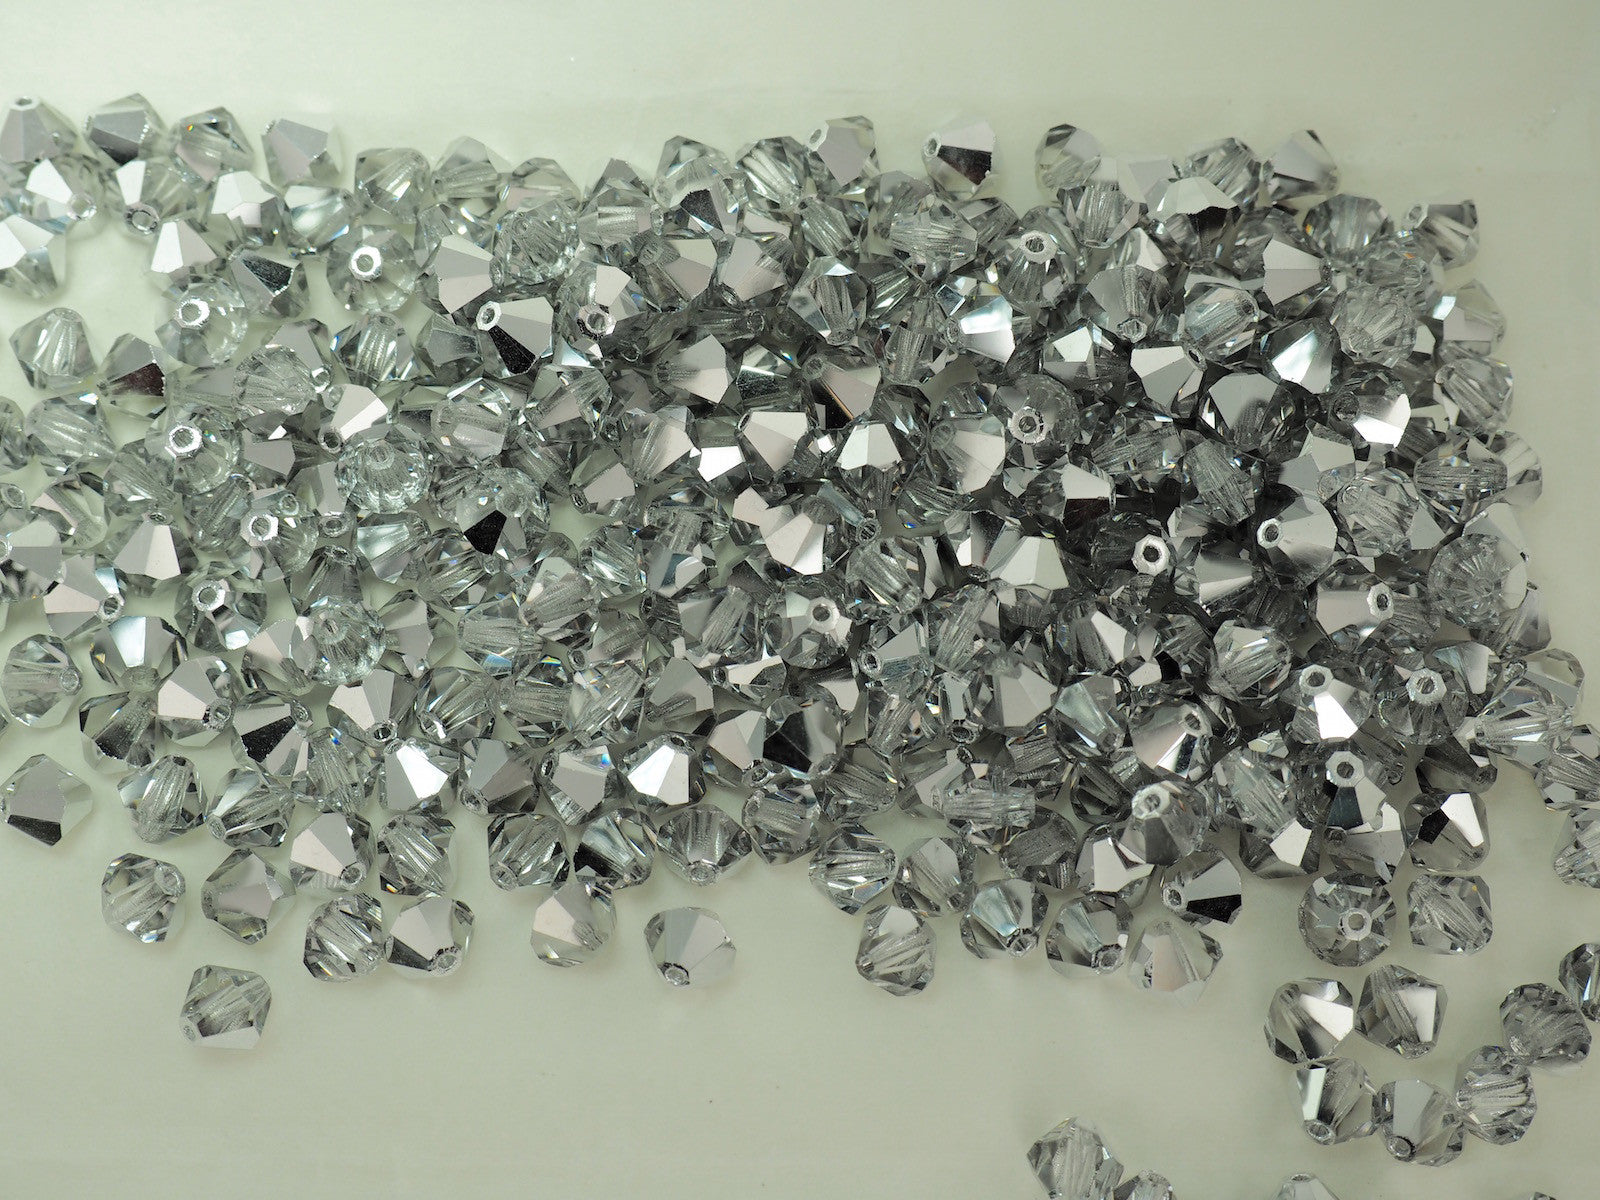 Crystal Labrador Half, Czech Glass Beads, Machine Cut Bicones (MC Rondell, Diamond Shape), clear crystals half coated with CAL silver metallic